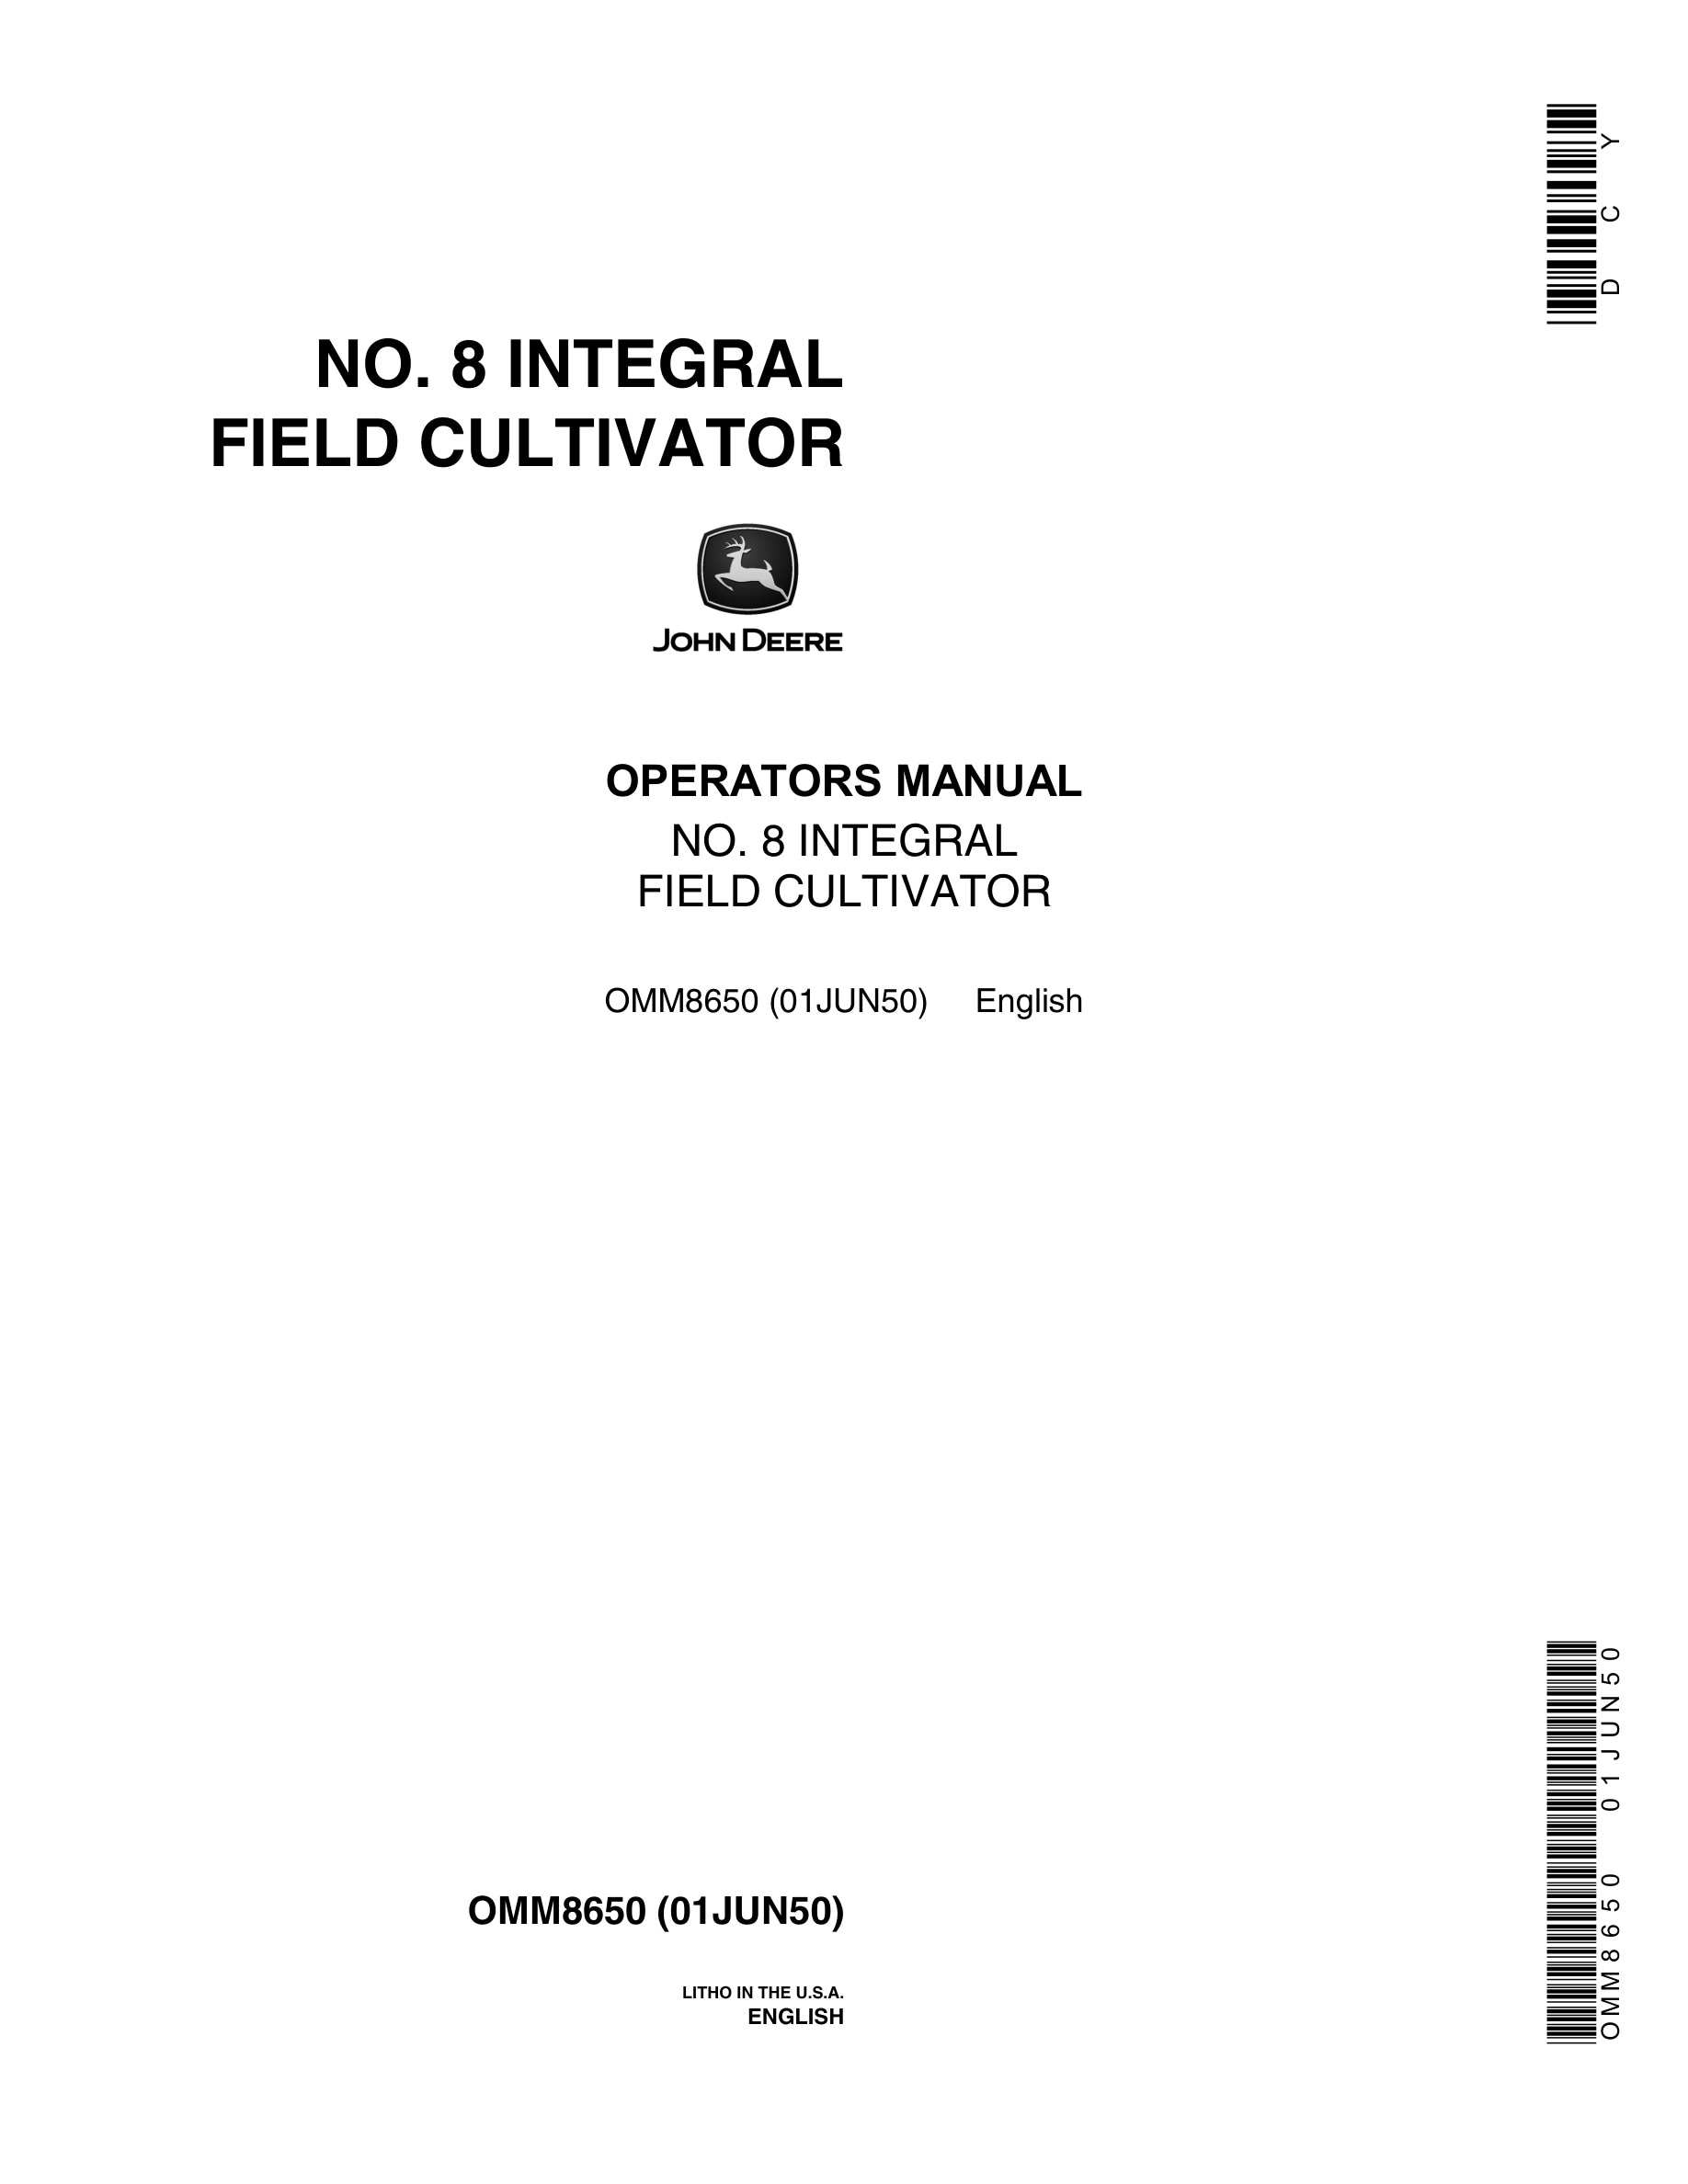 John Deere 8 INTEGRAL FIELD CULTIVATOR Operator Manual OMM8650-1